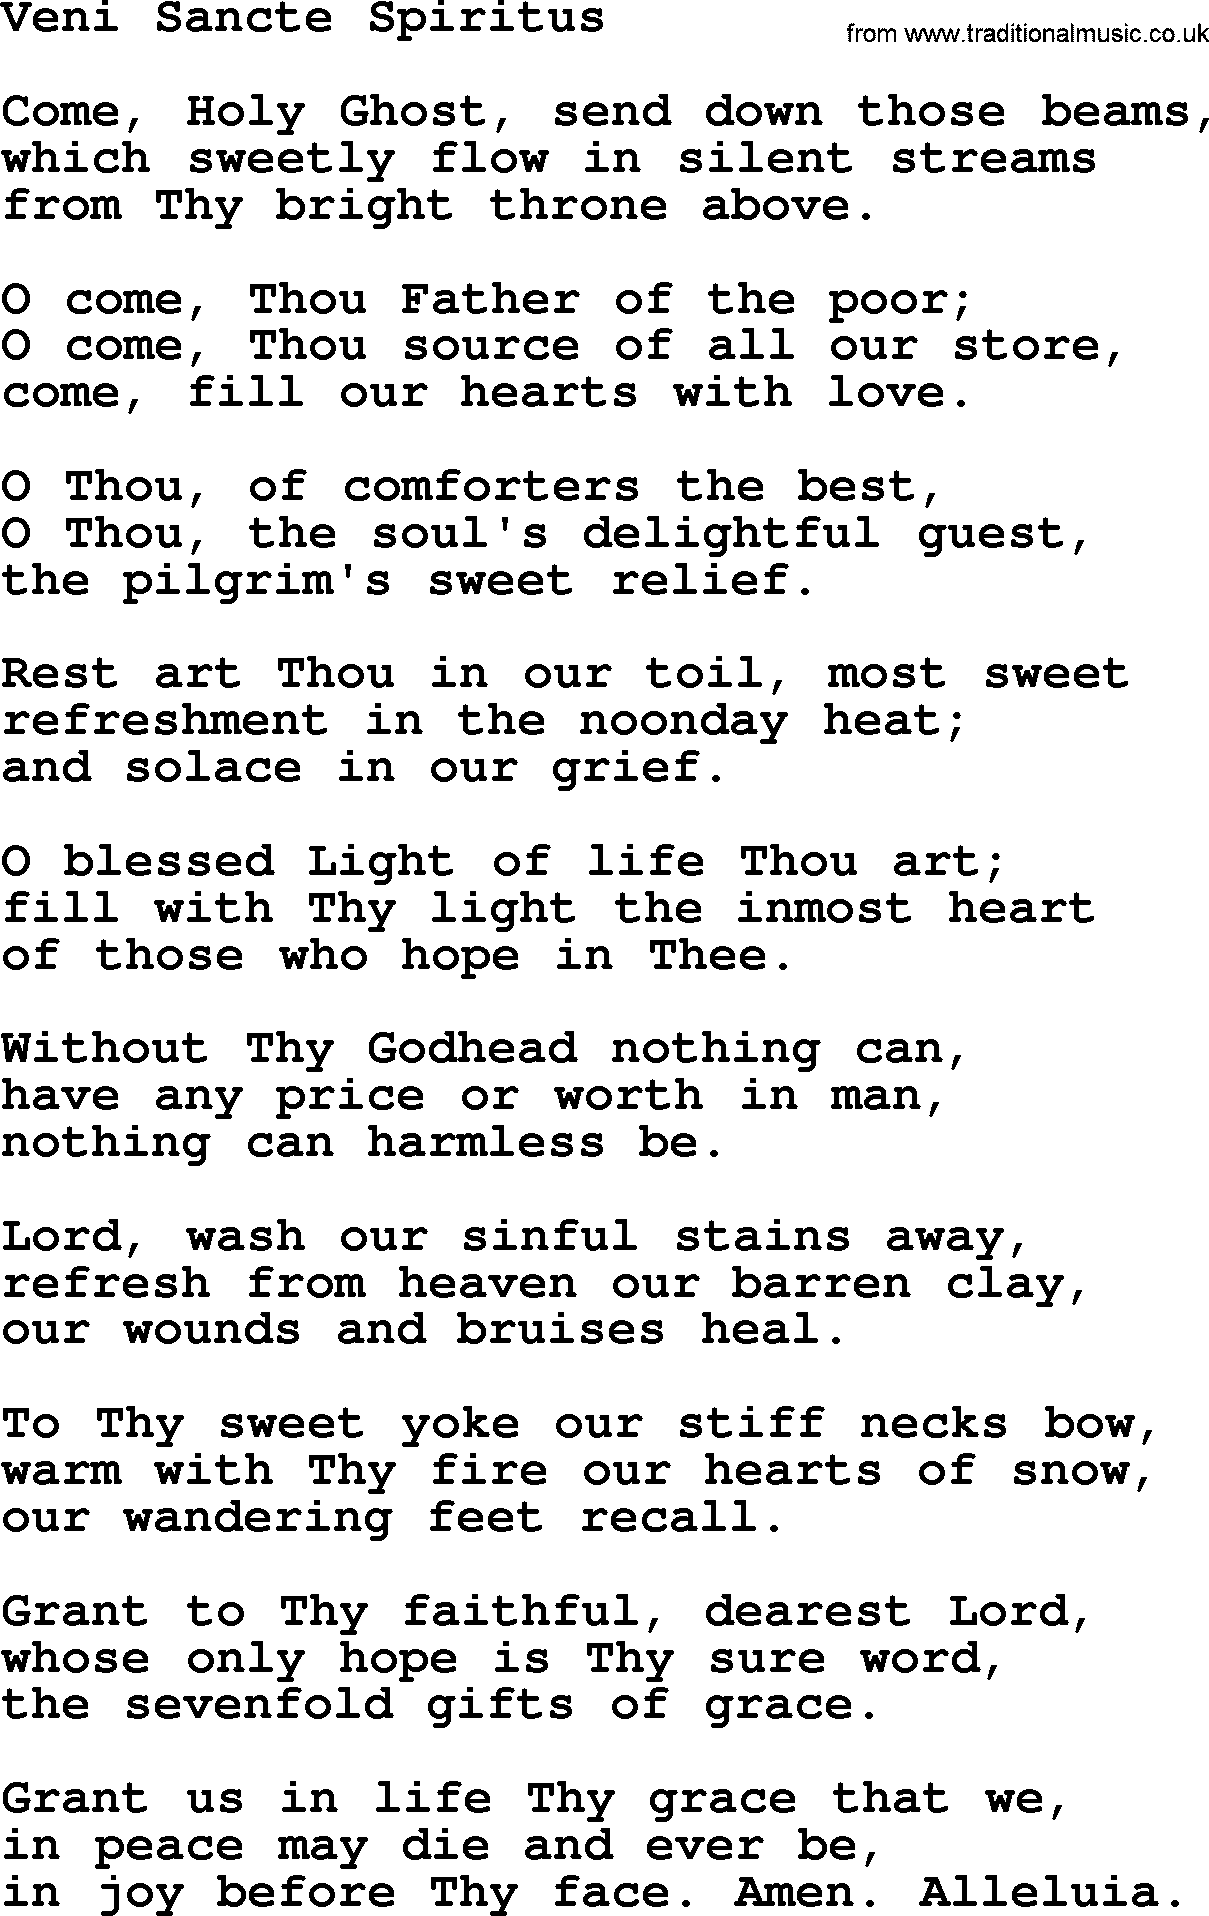 Catholic Hymn: Veni Sancte Spiritus lyrics with PDF